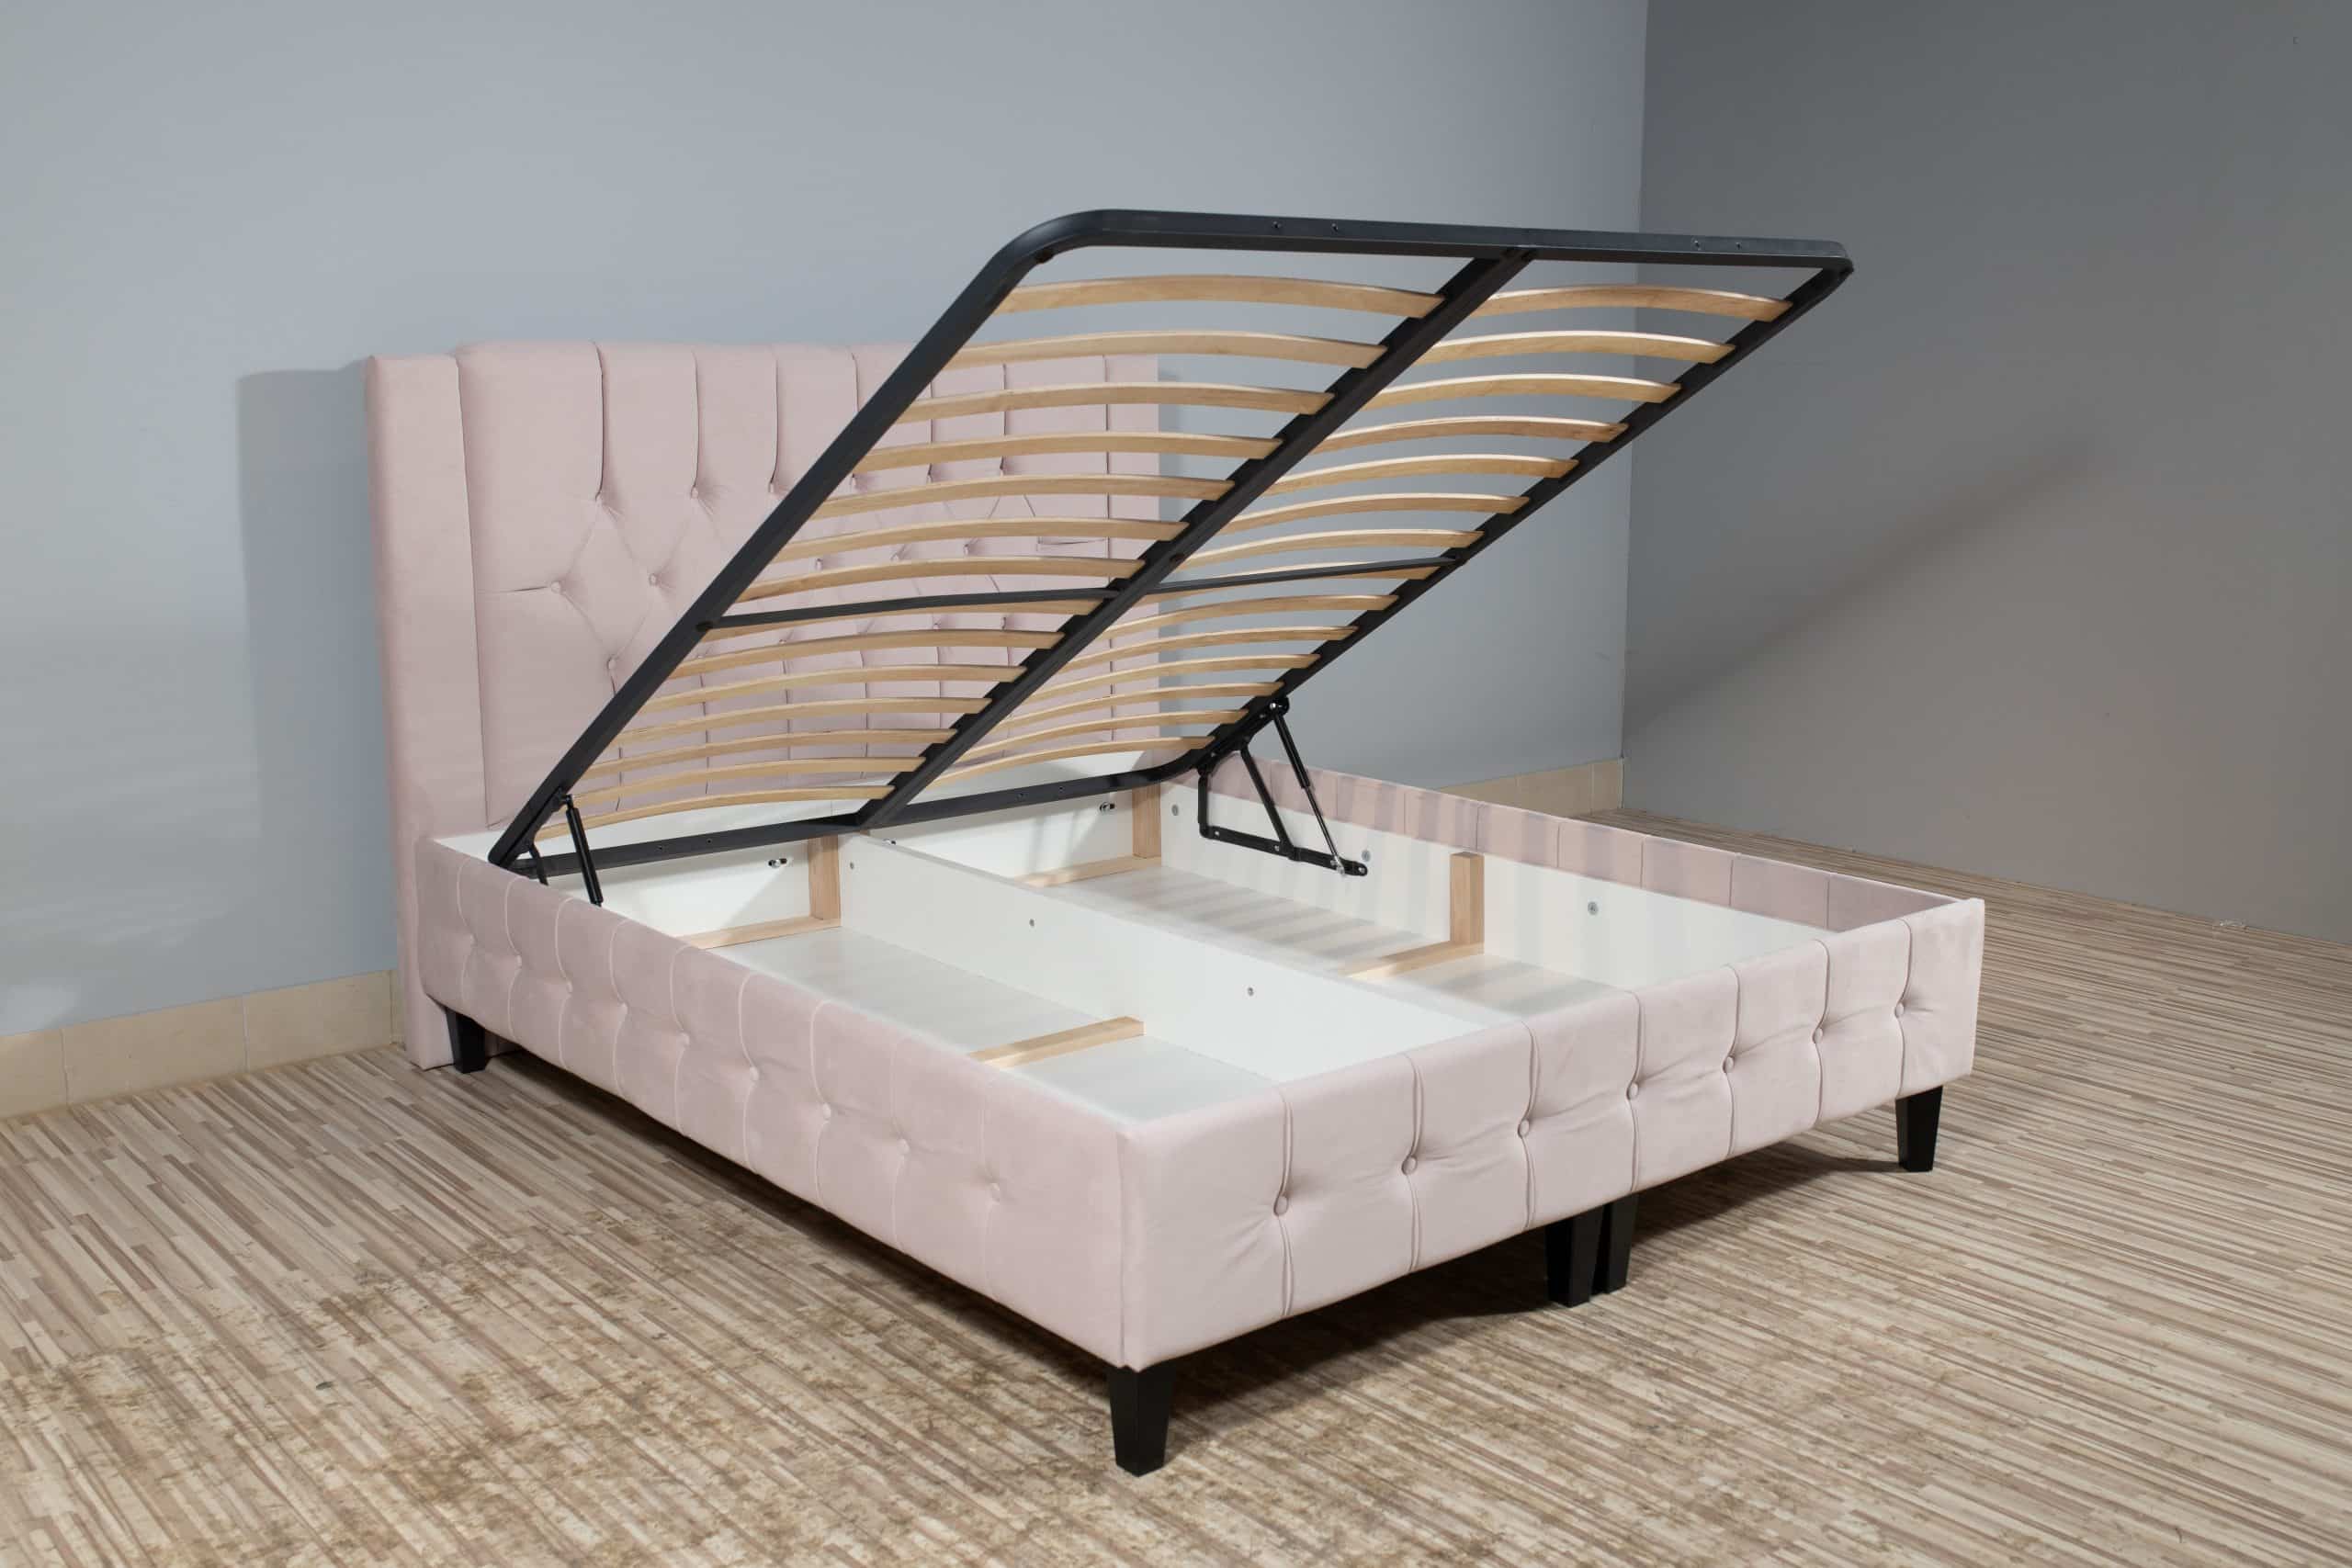 a bed frame